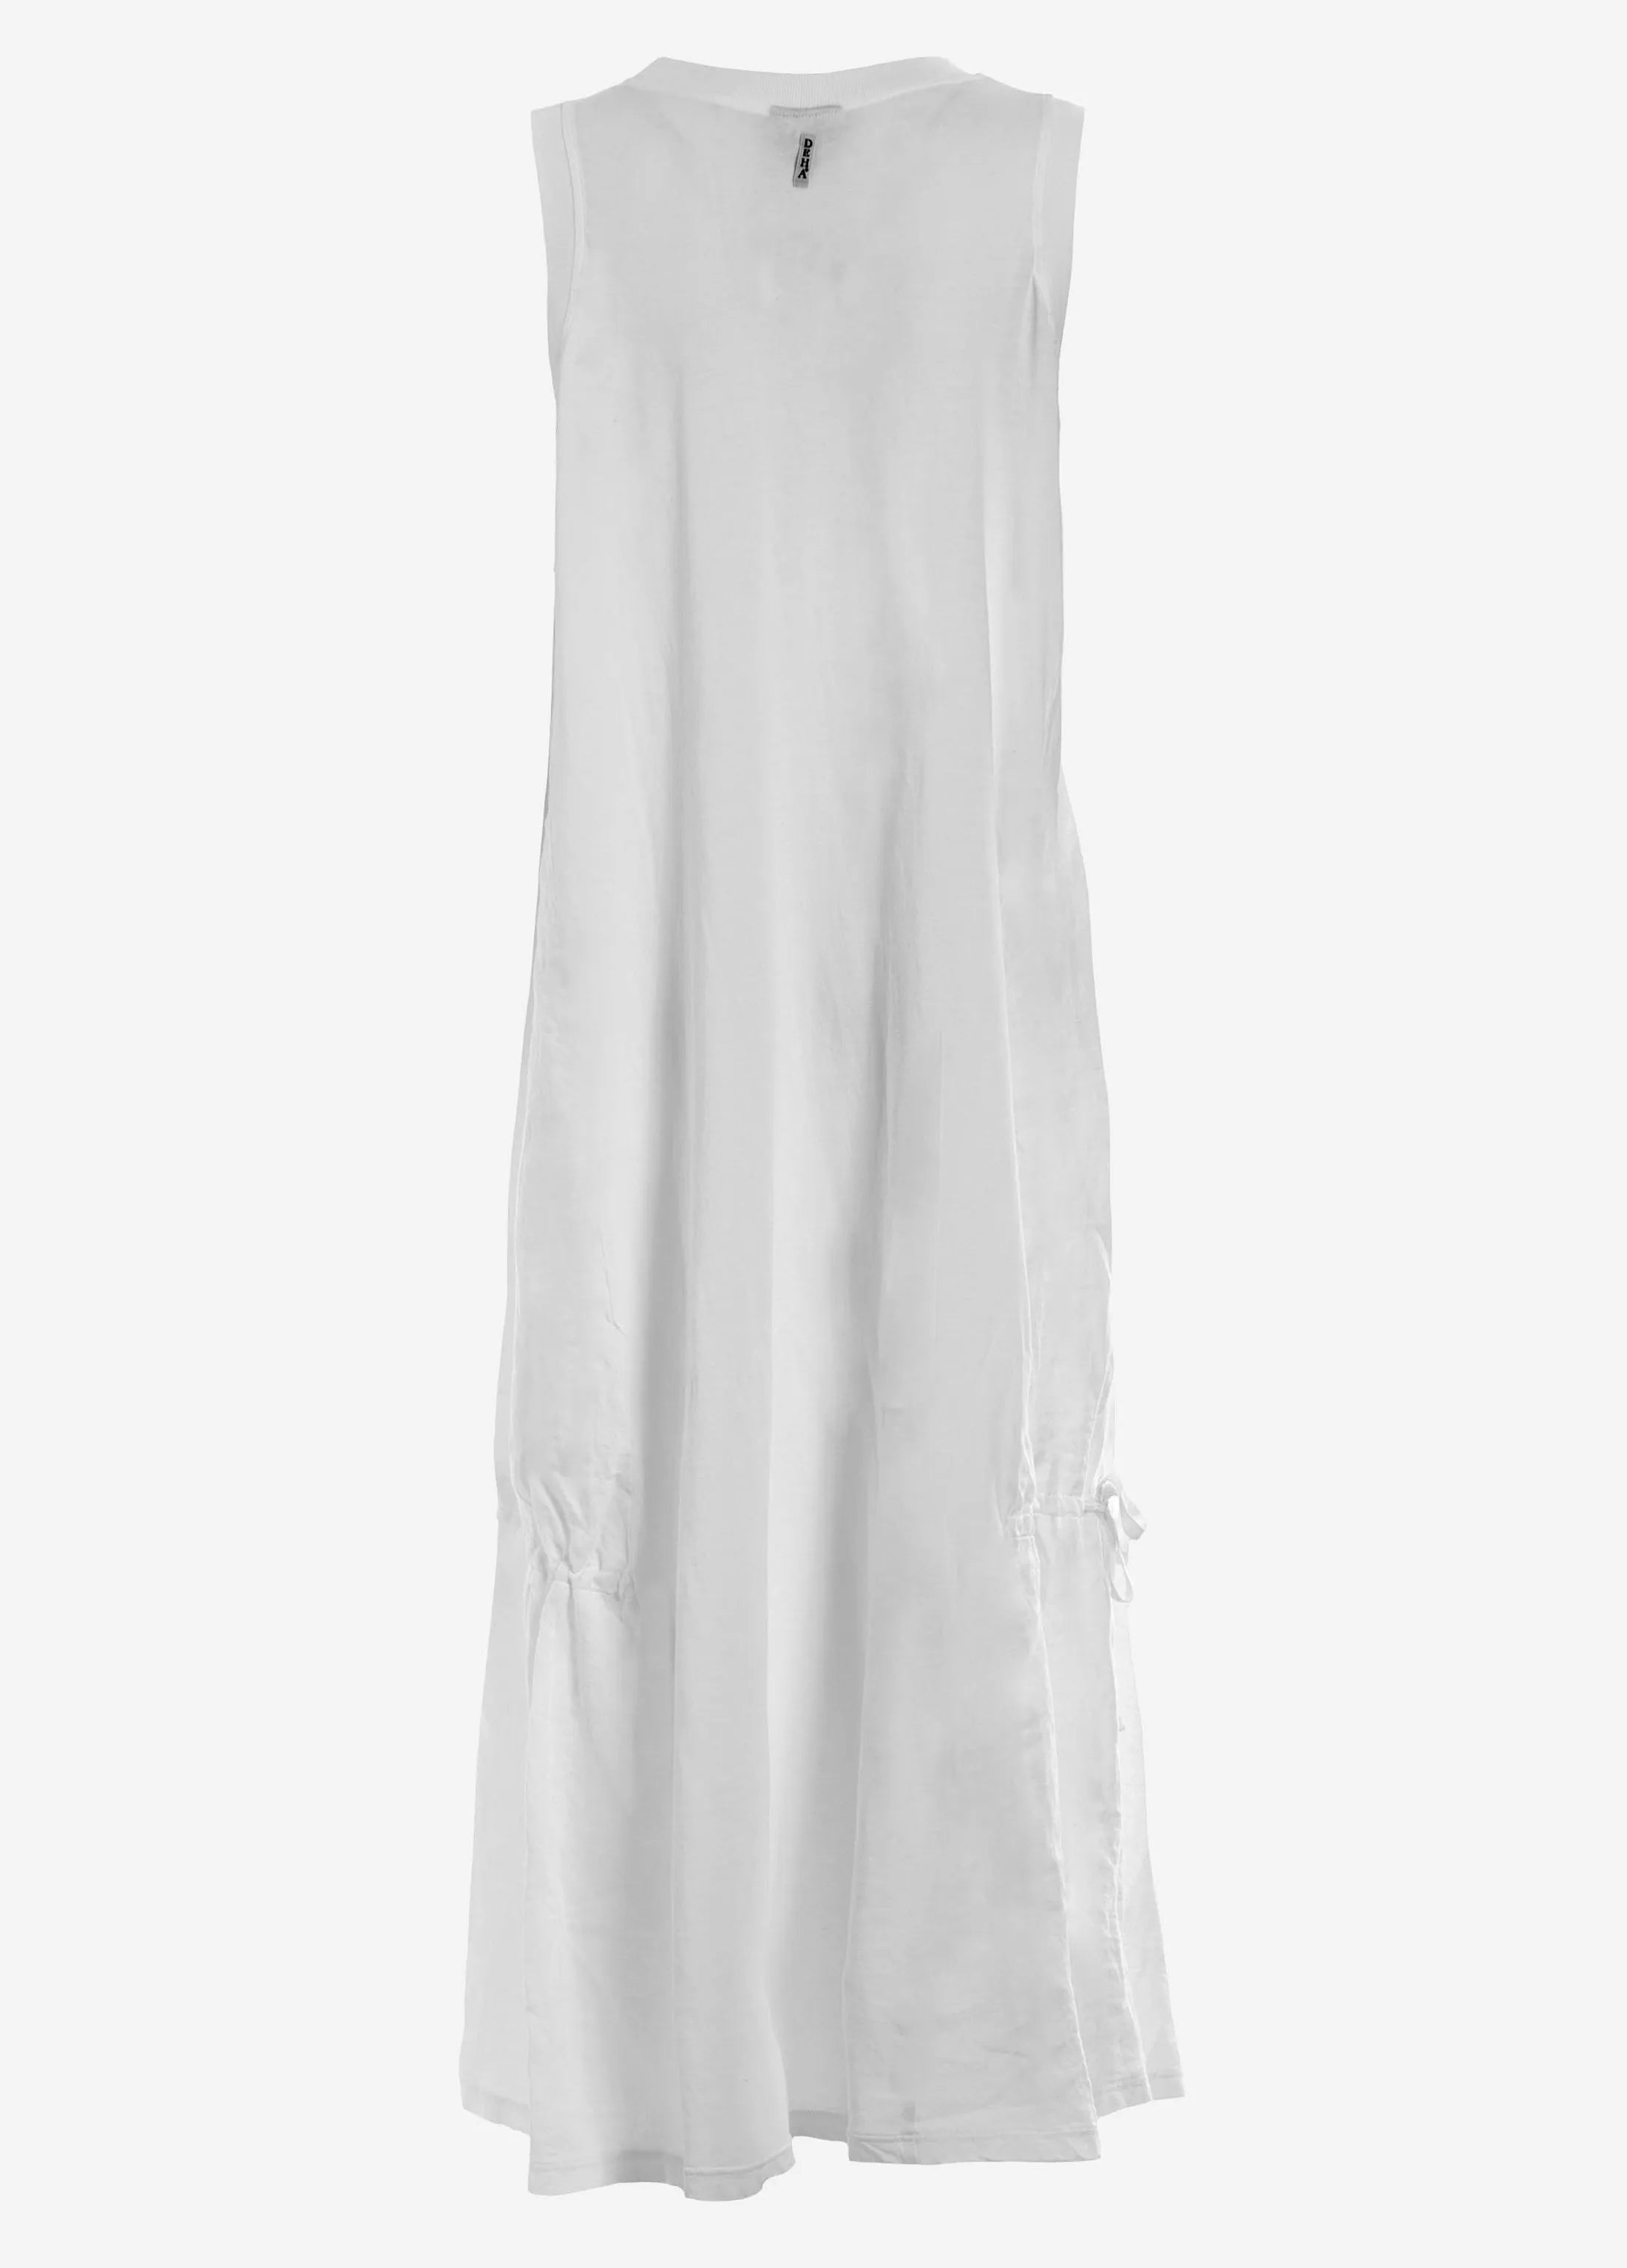 Adjustable long dress - white